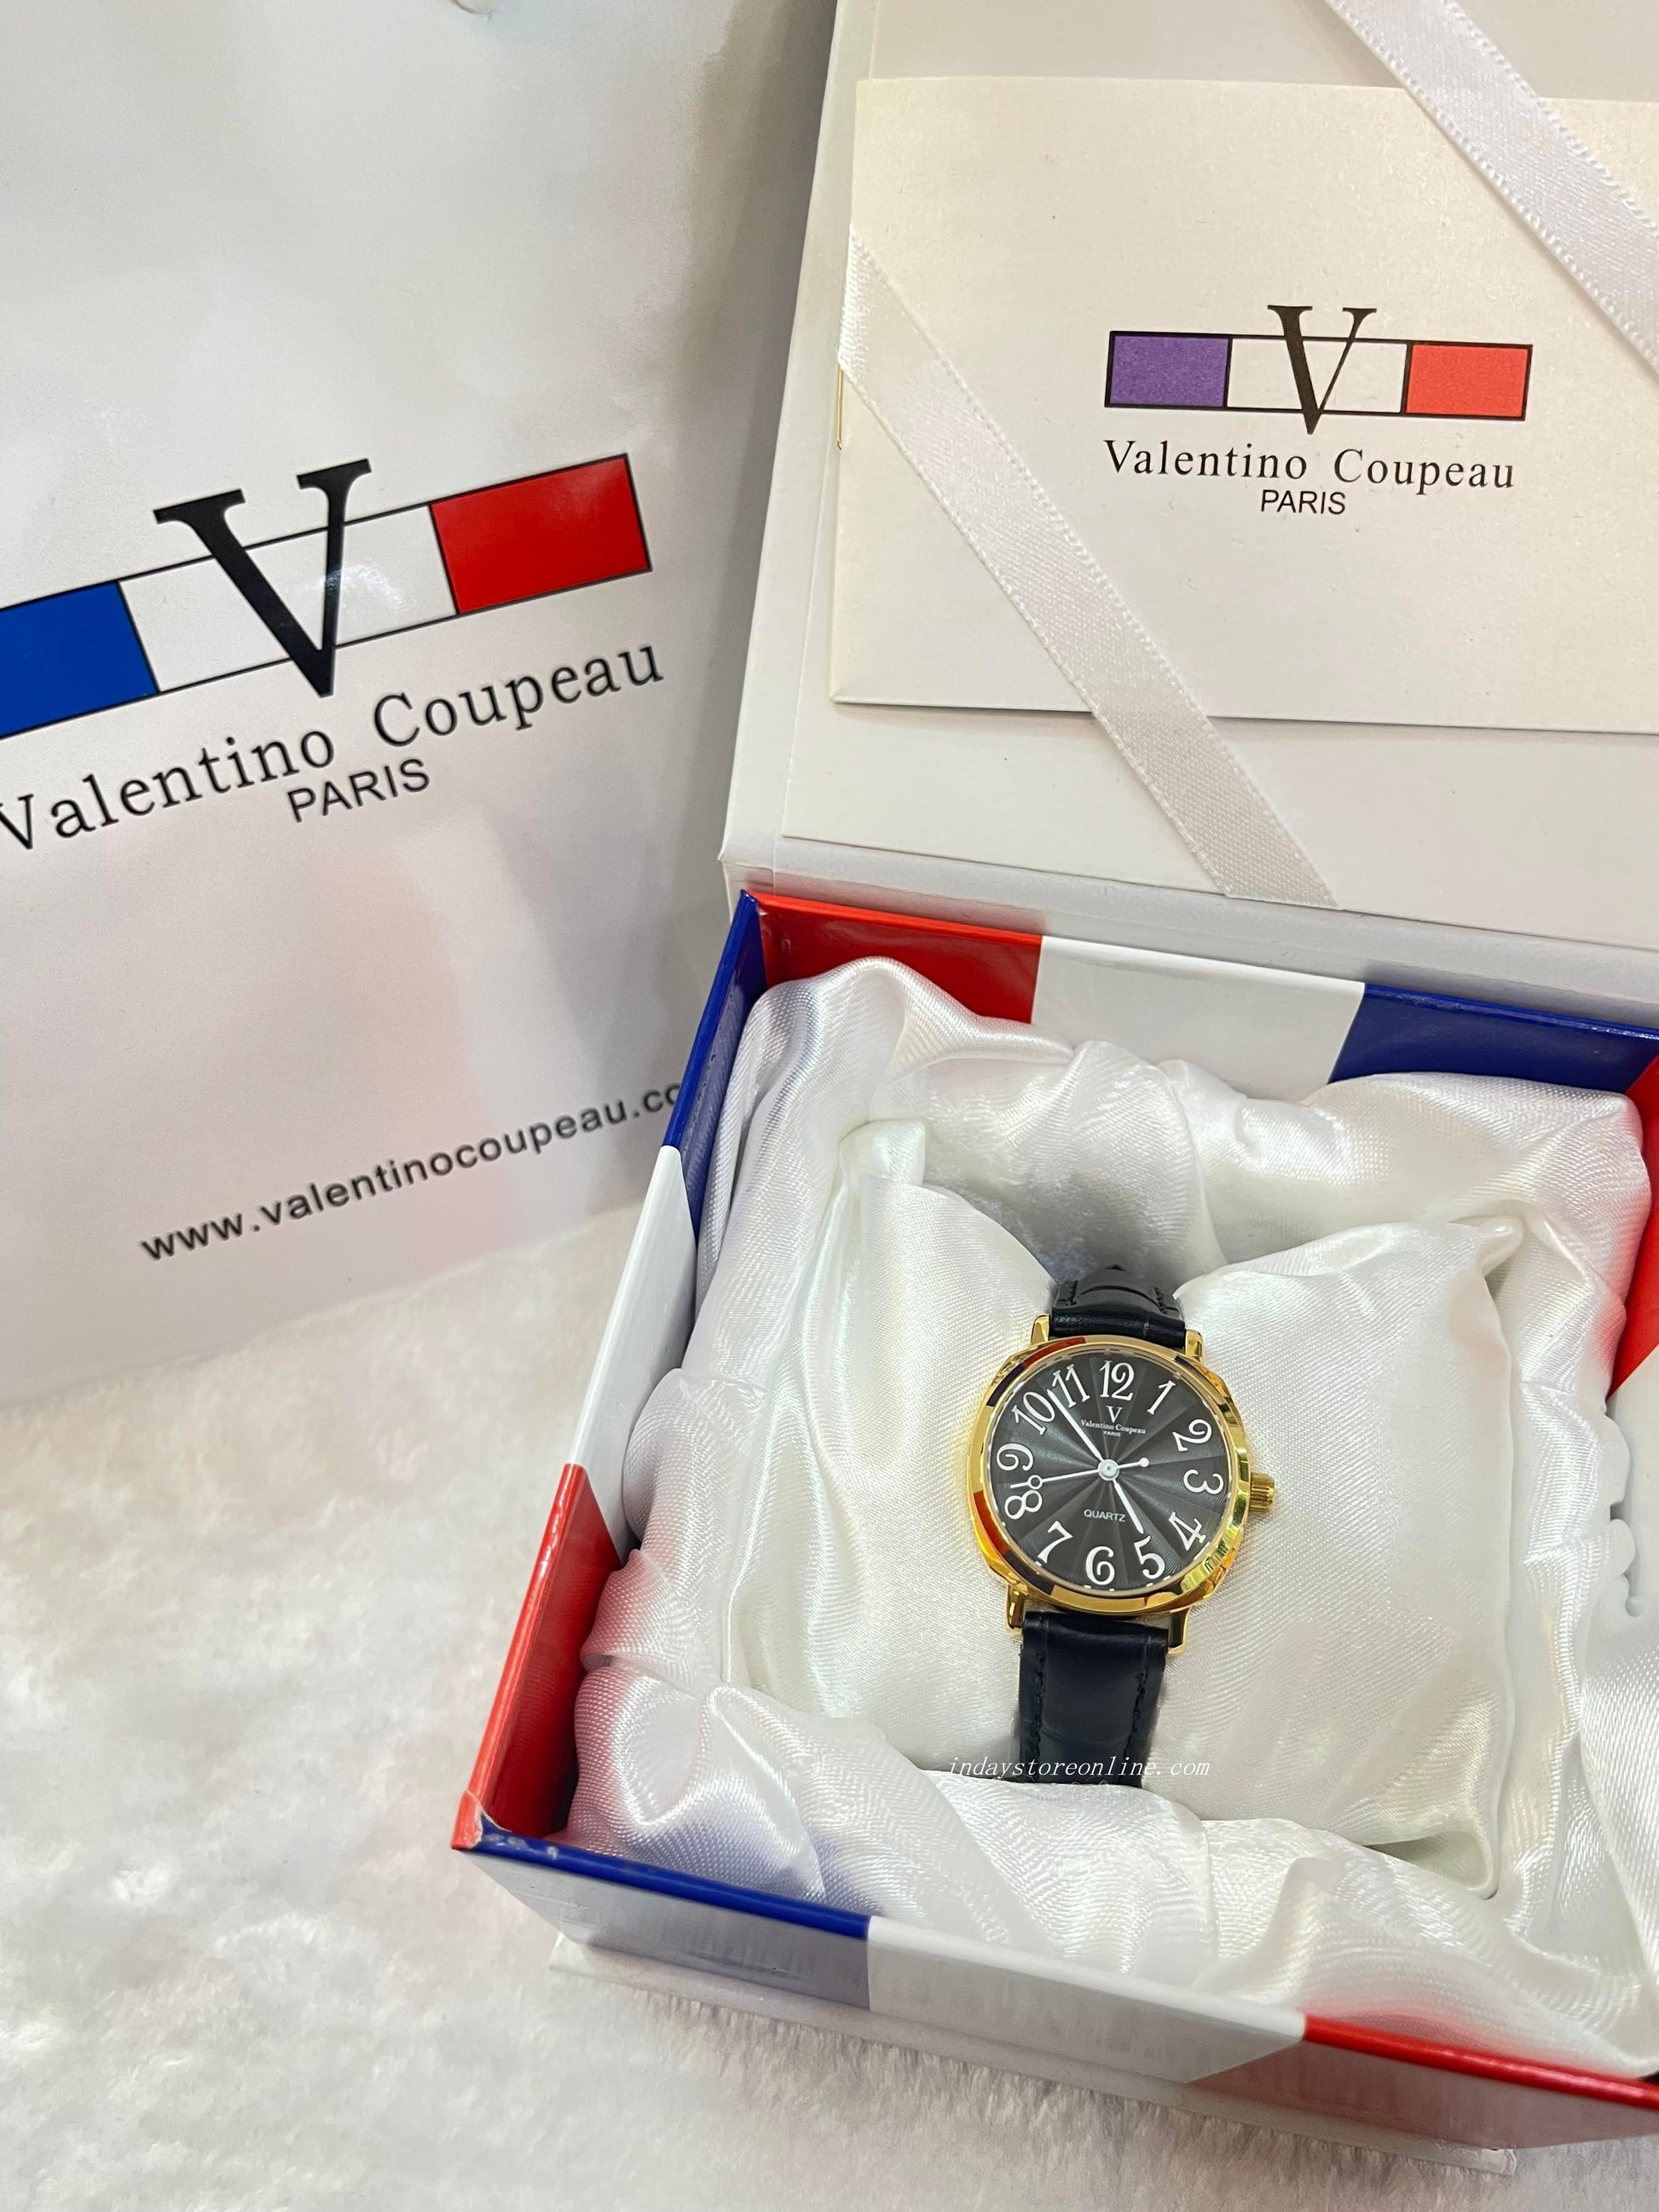 Valentino Coupeau Women's Watch 61601KL-4 https://indaystoreonline.com/